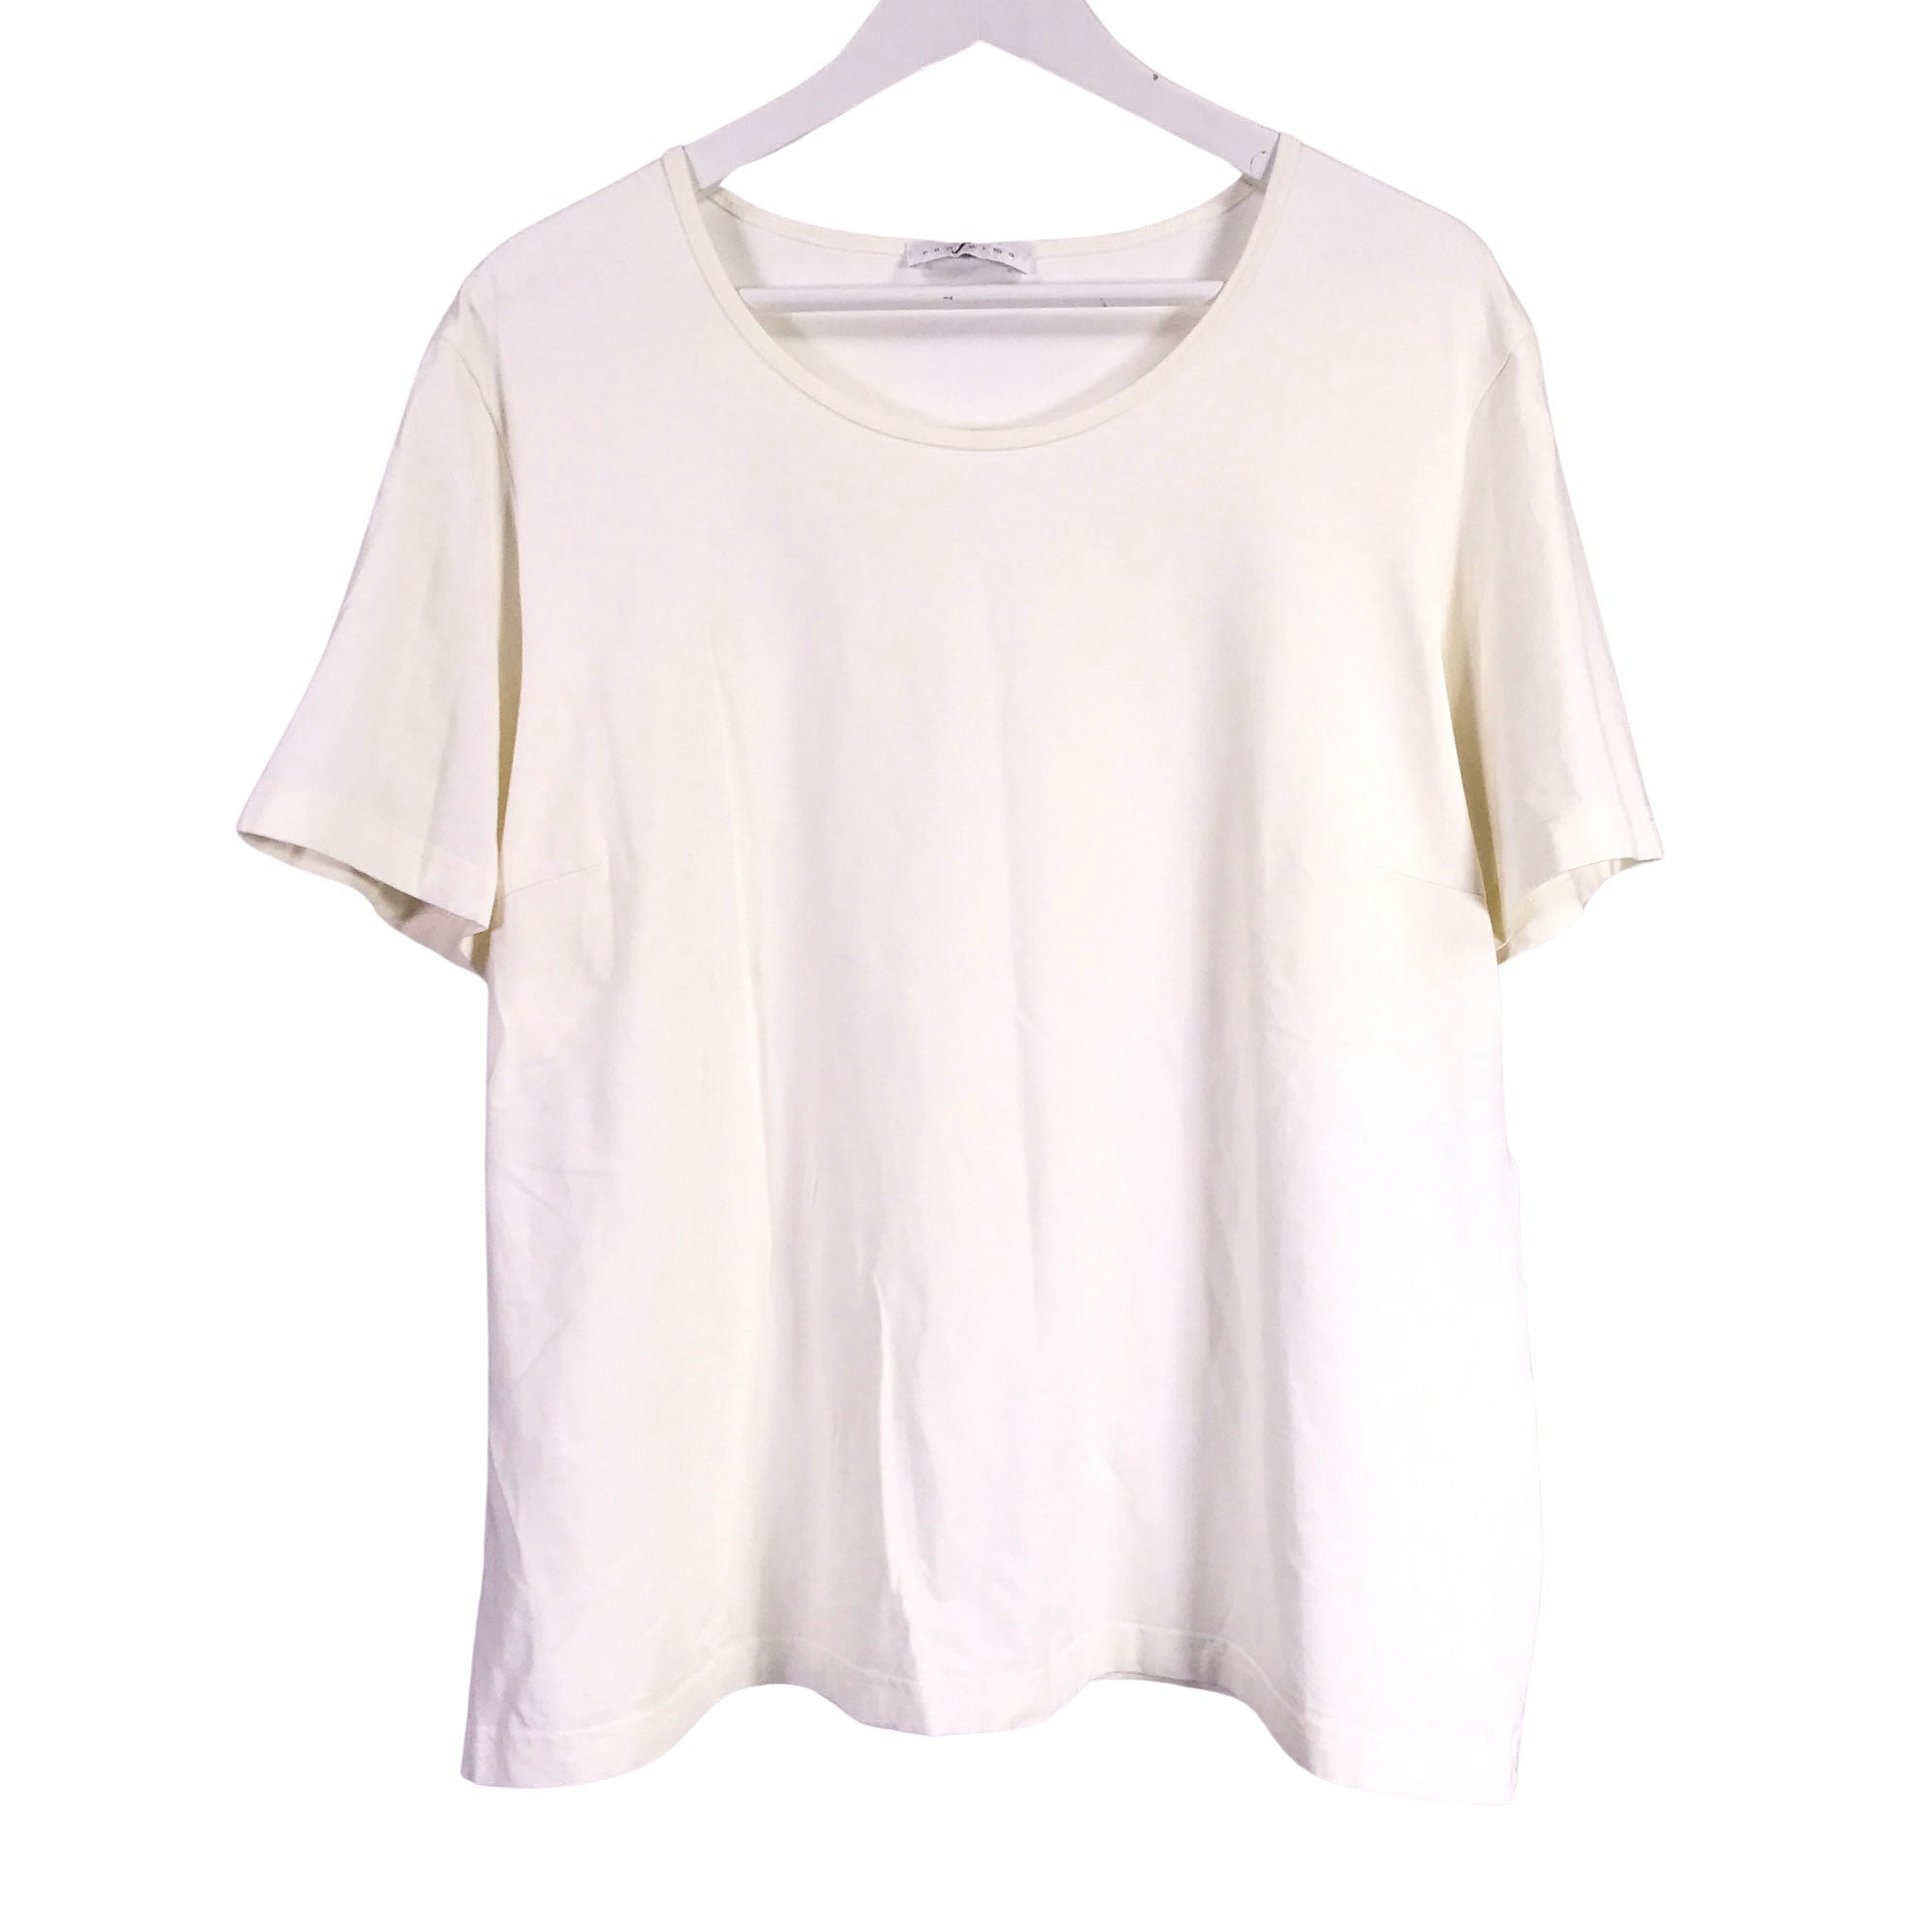 Women's Proforma T-shirt, size 48 (Naturaalne valge) | Emmy